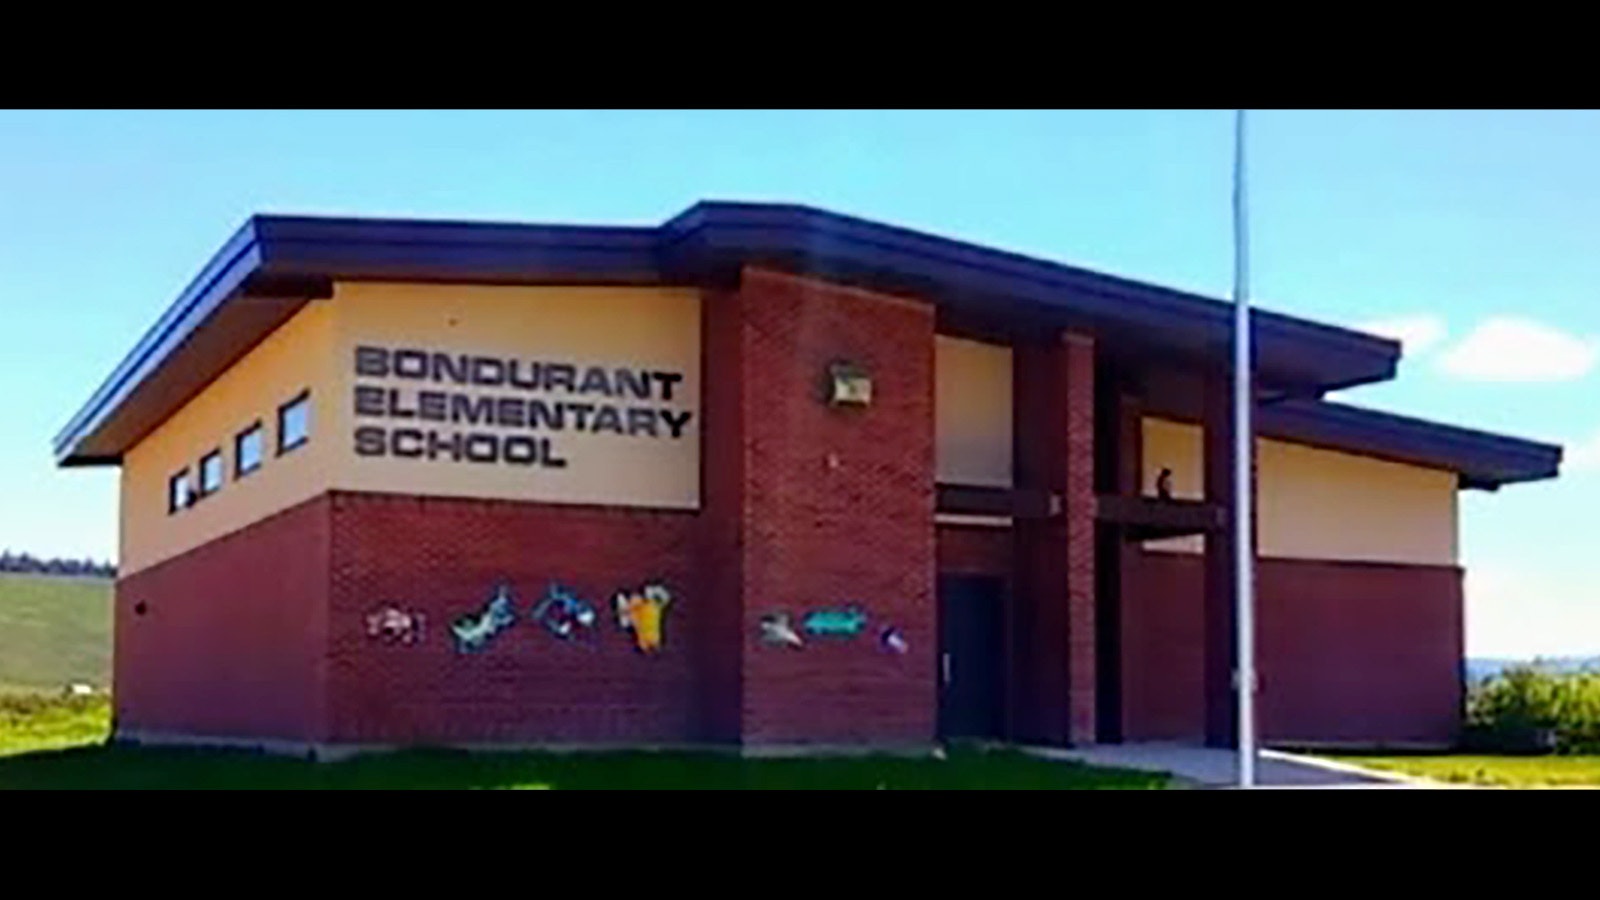 Bondurant Elementary School in Sublette County, Wyoming.